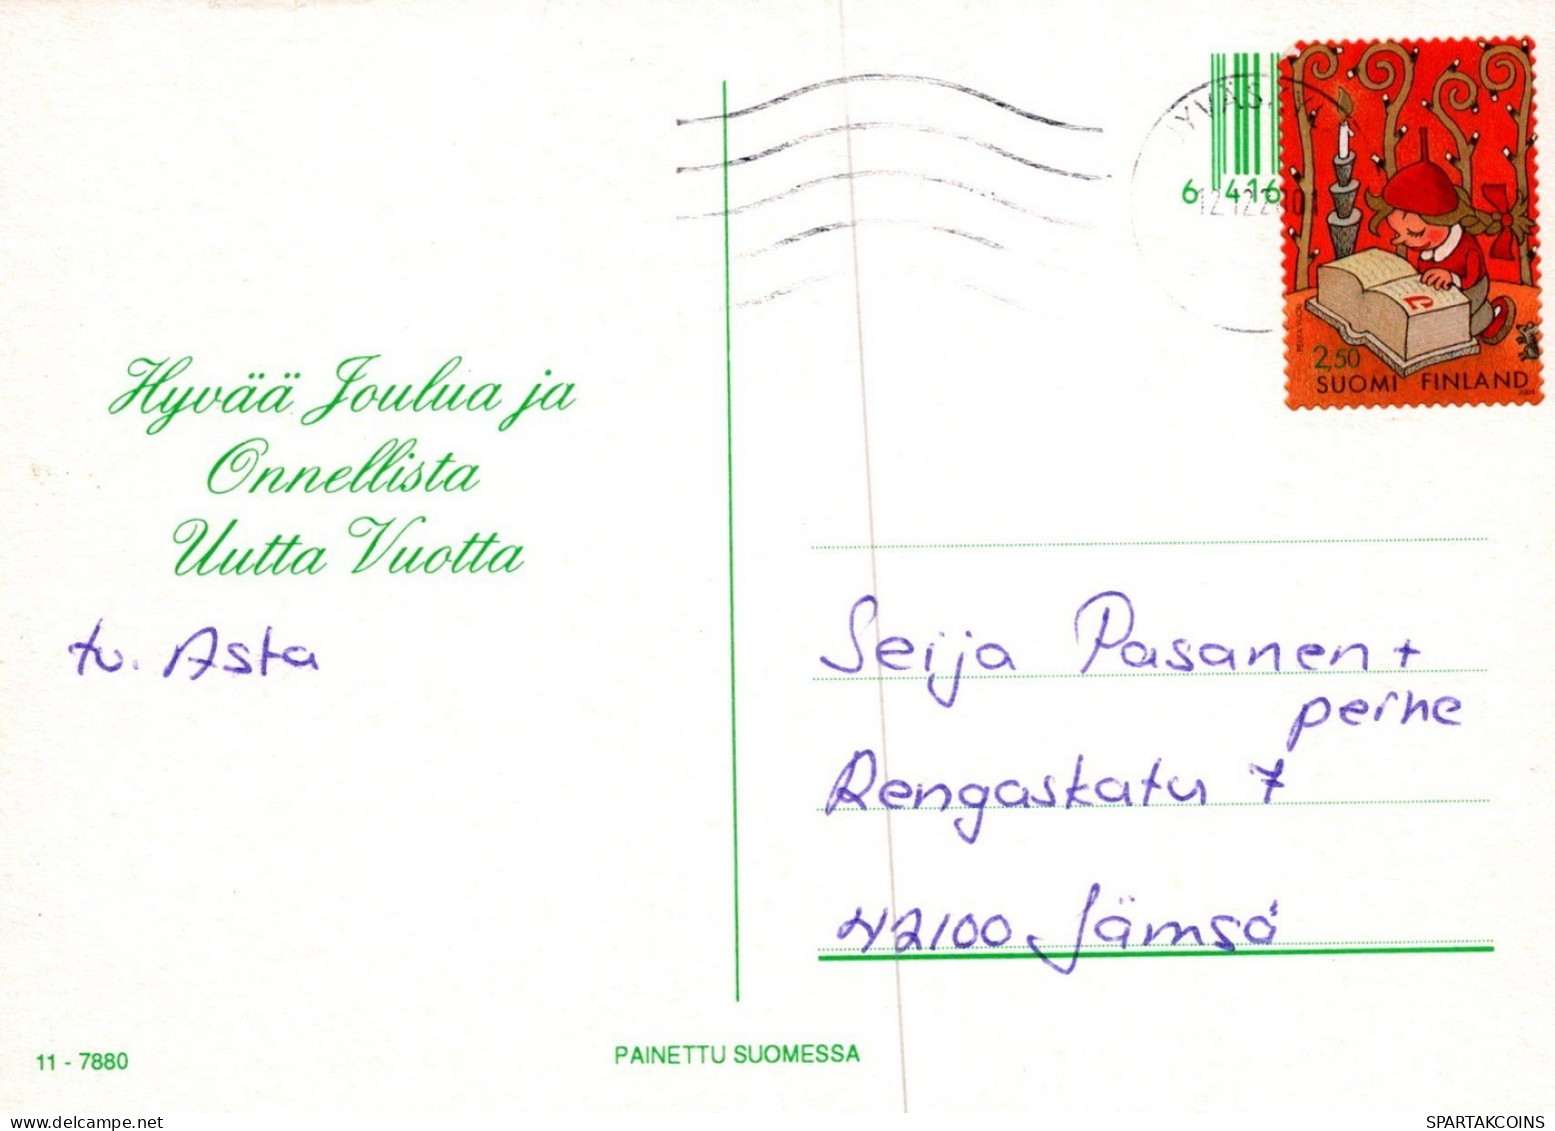 BABBO NATALE BAMBINO Natale Vintage Cartolina CPSM #PAK251.IT - Santa Claus